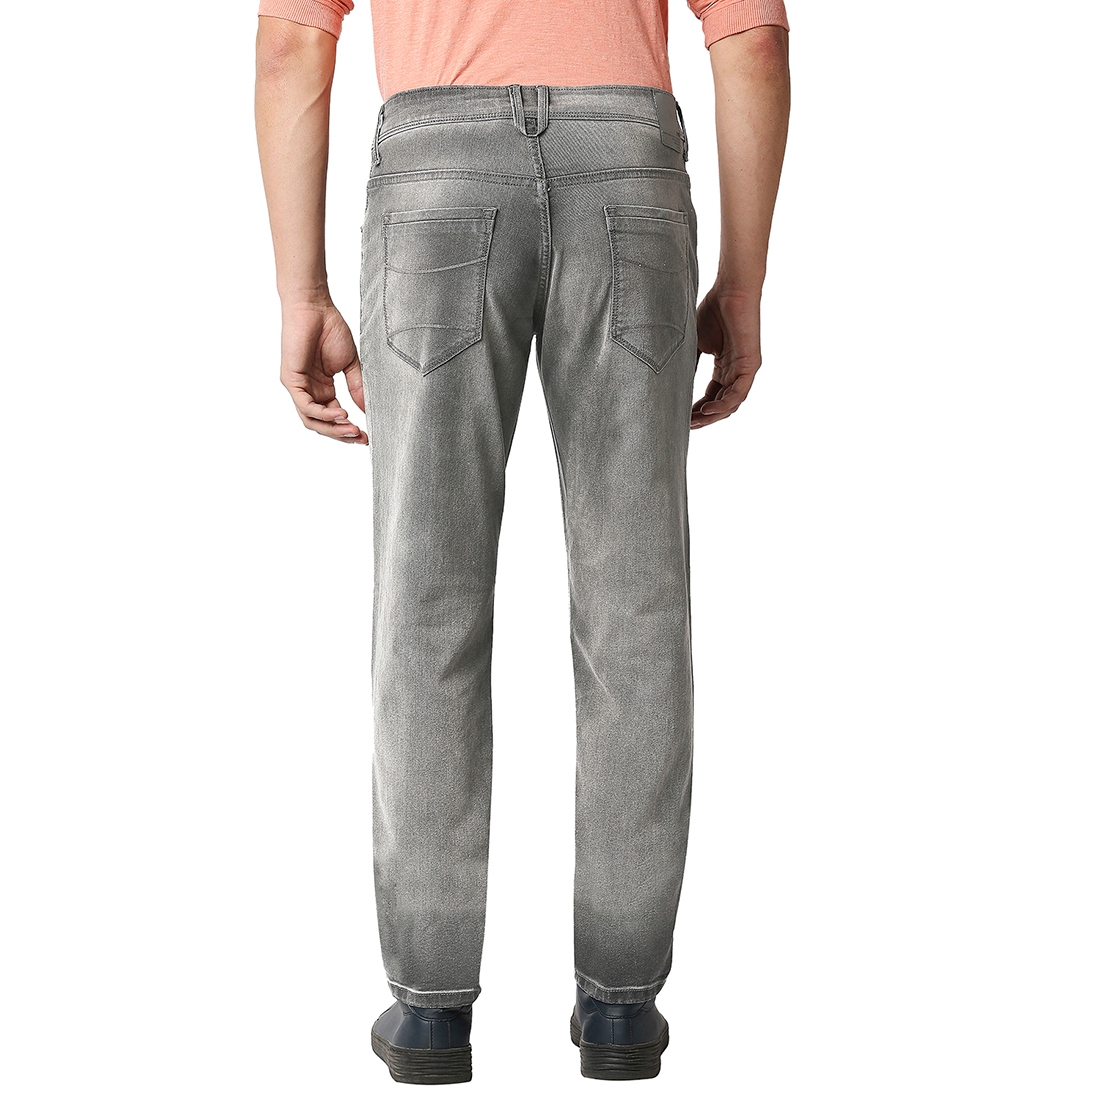 Basics | Men's Grey Cotton Blend Solid Jeans 1